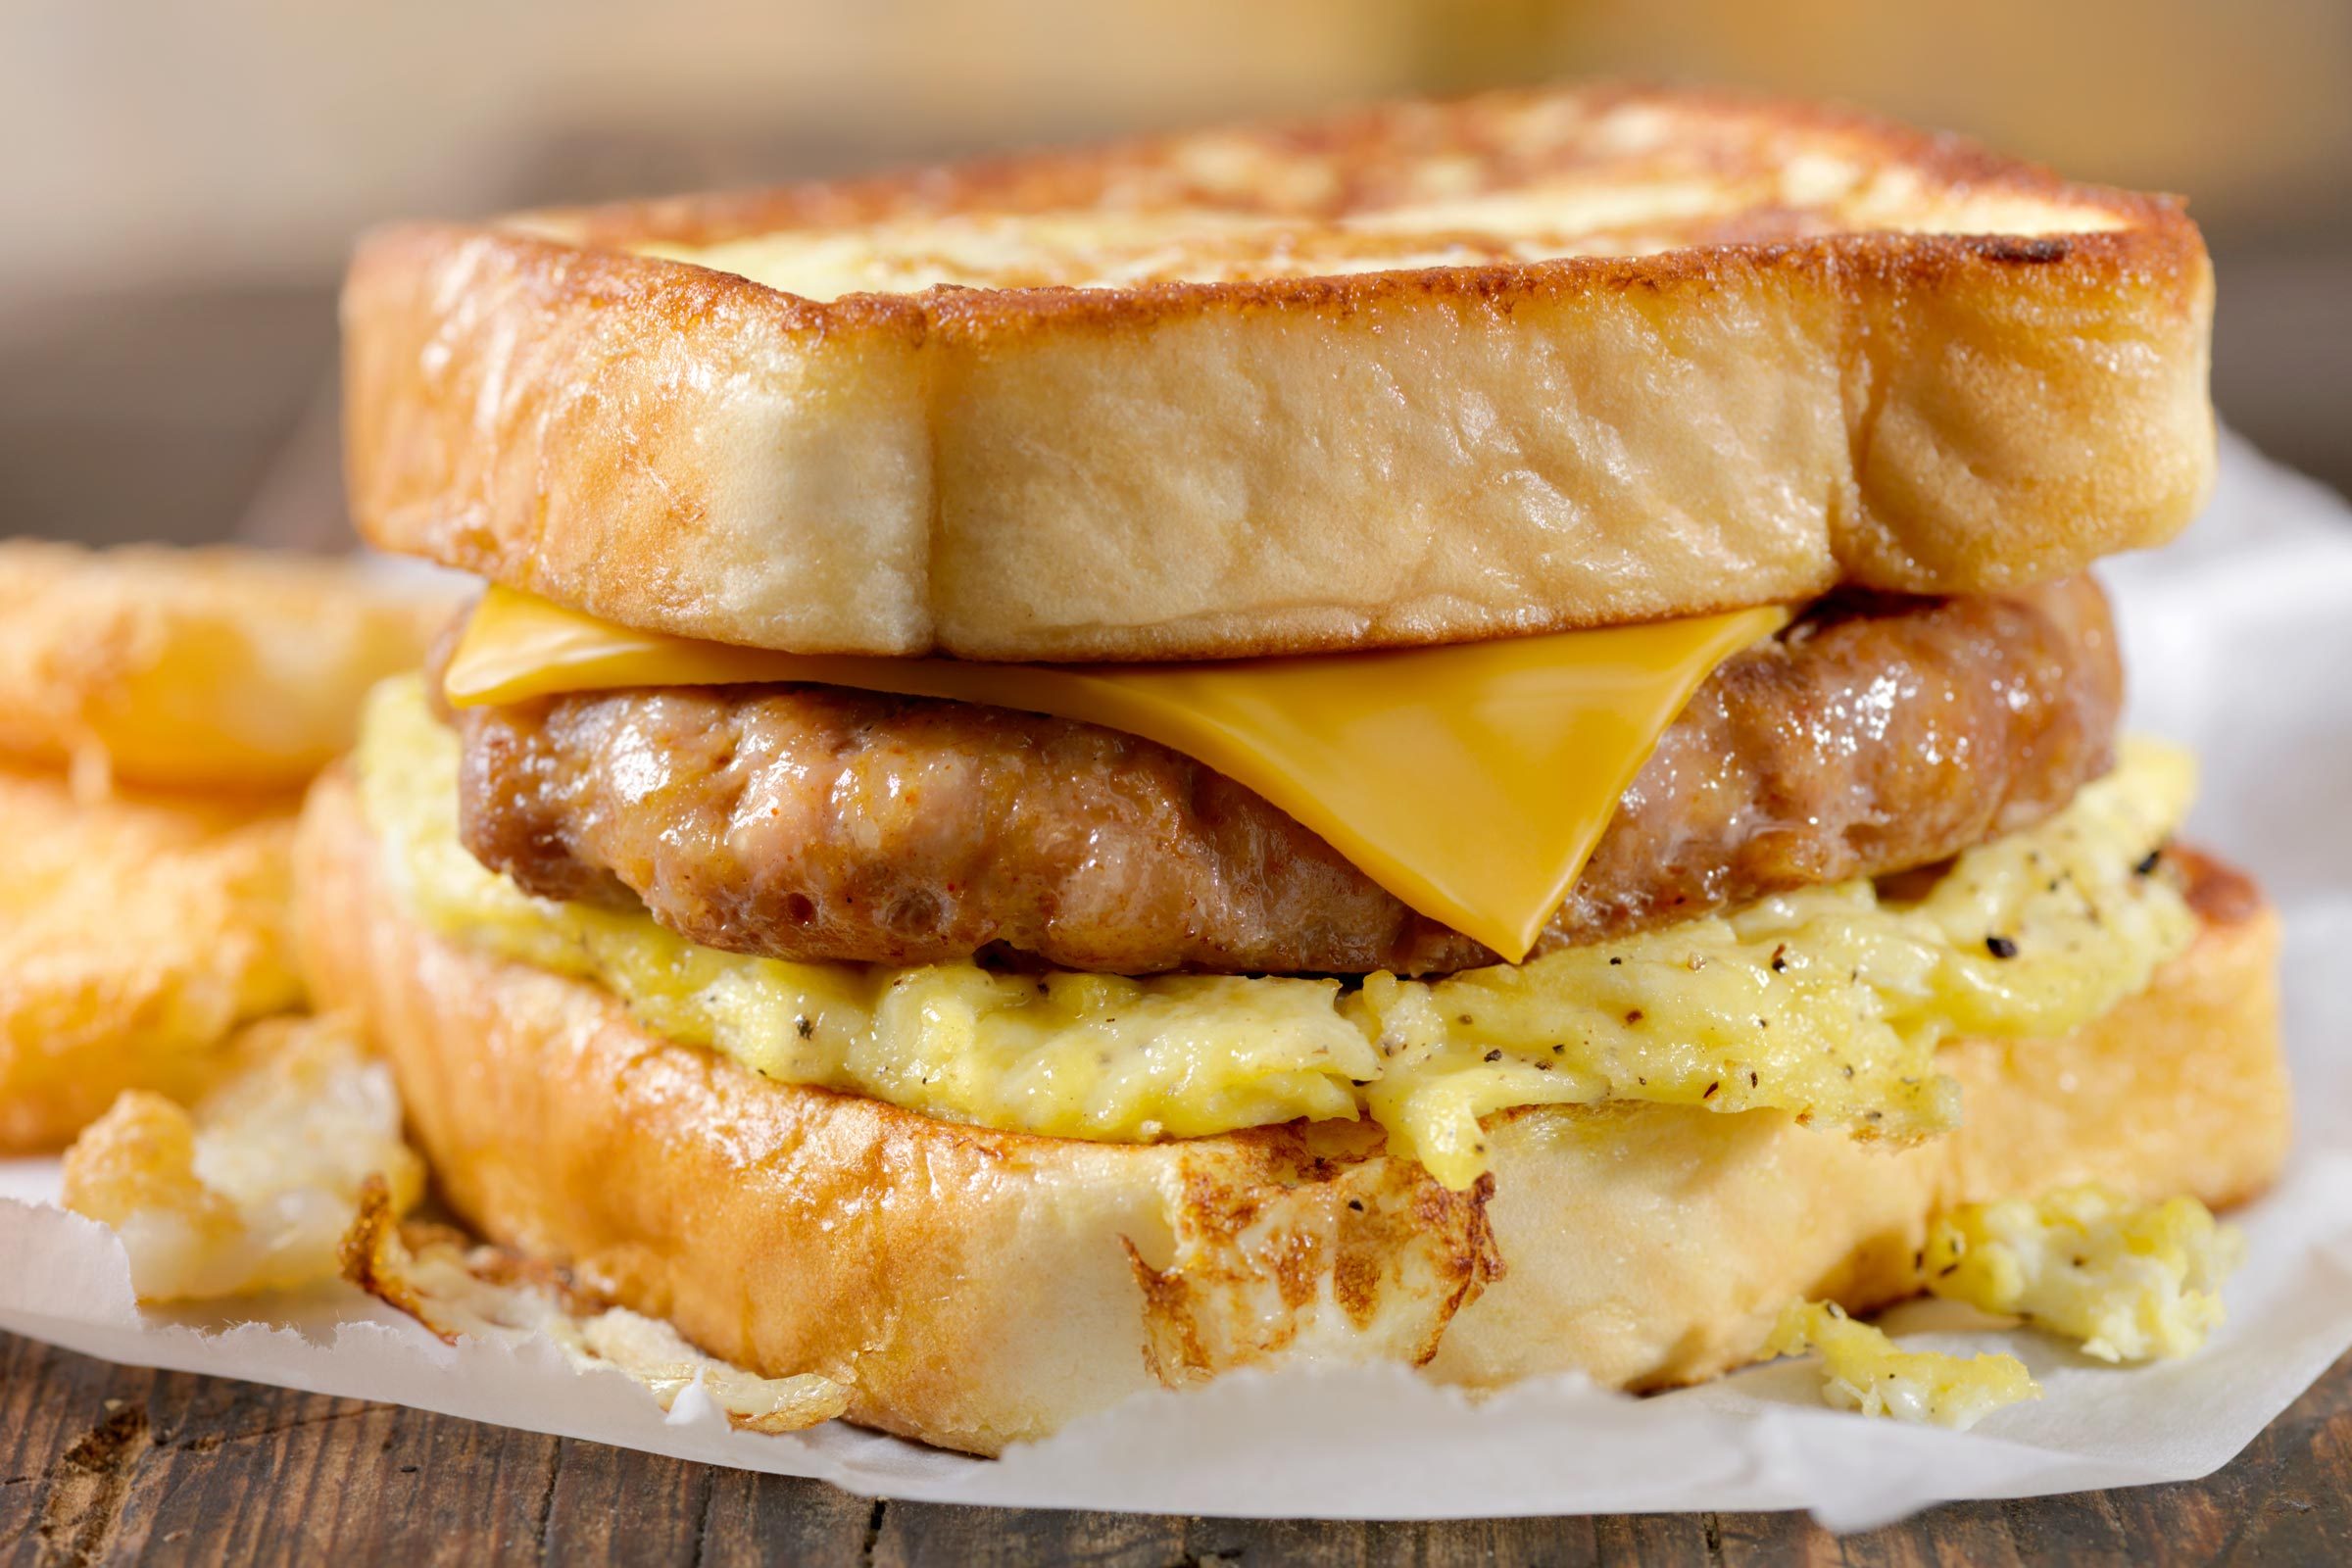 Prepared Sandwiches Were Just Recalled in at Least 5 U.S. States